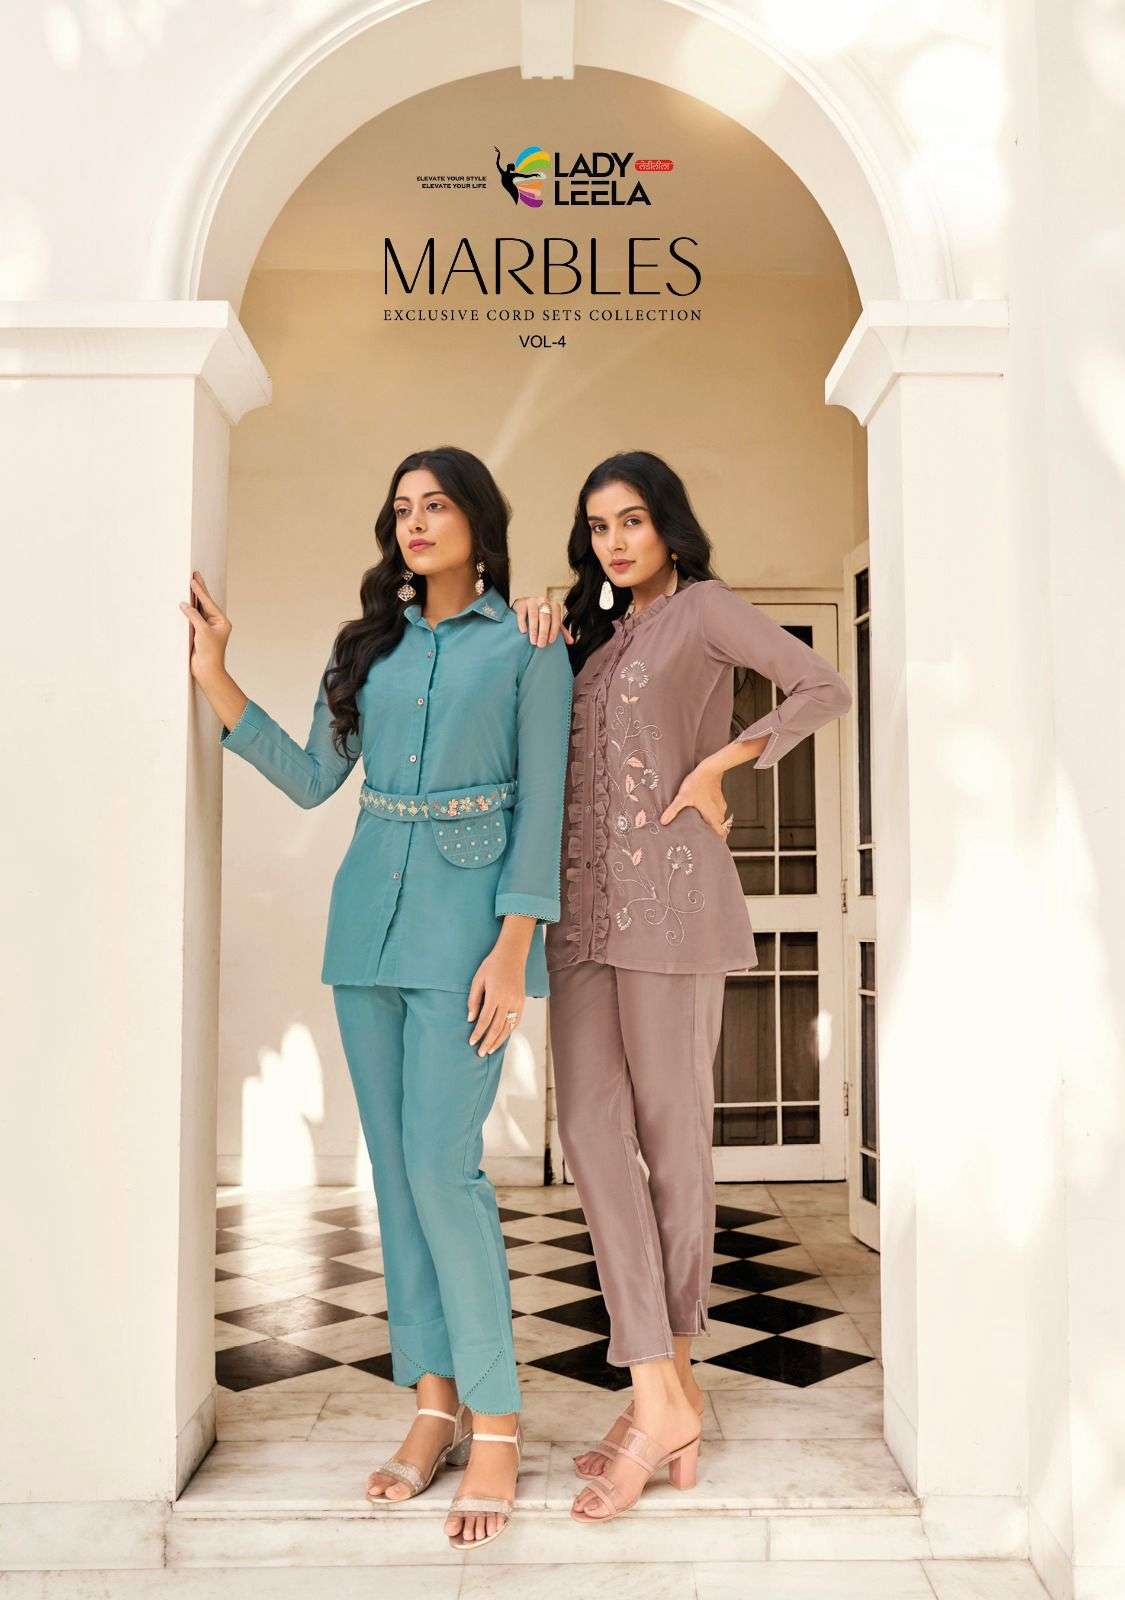 Lady Leela Marbles Vol 4 Premium Designs Cord Set Western Outfit